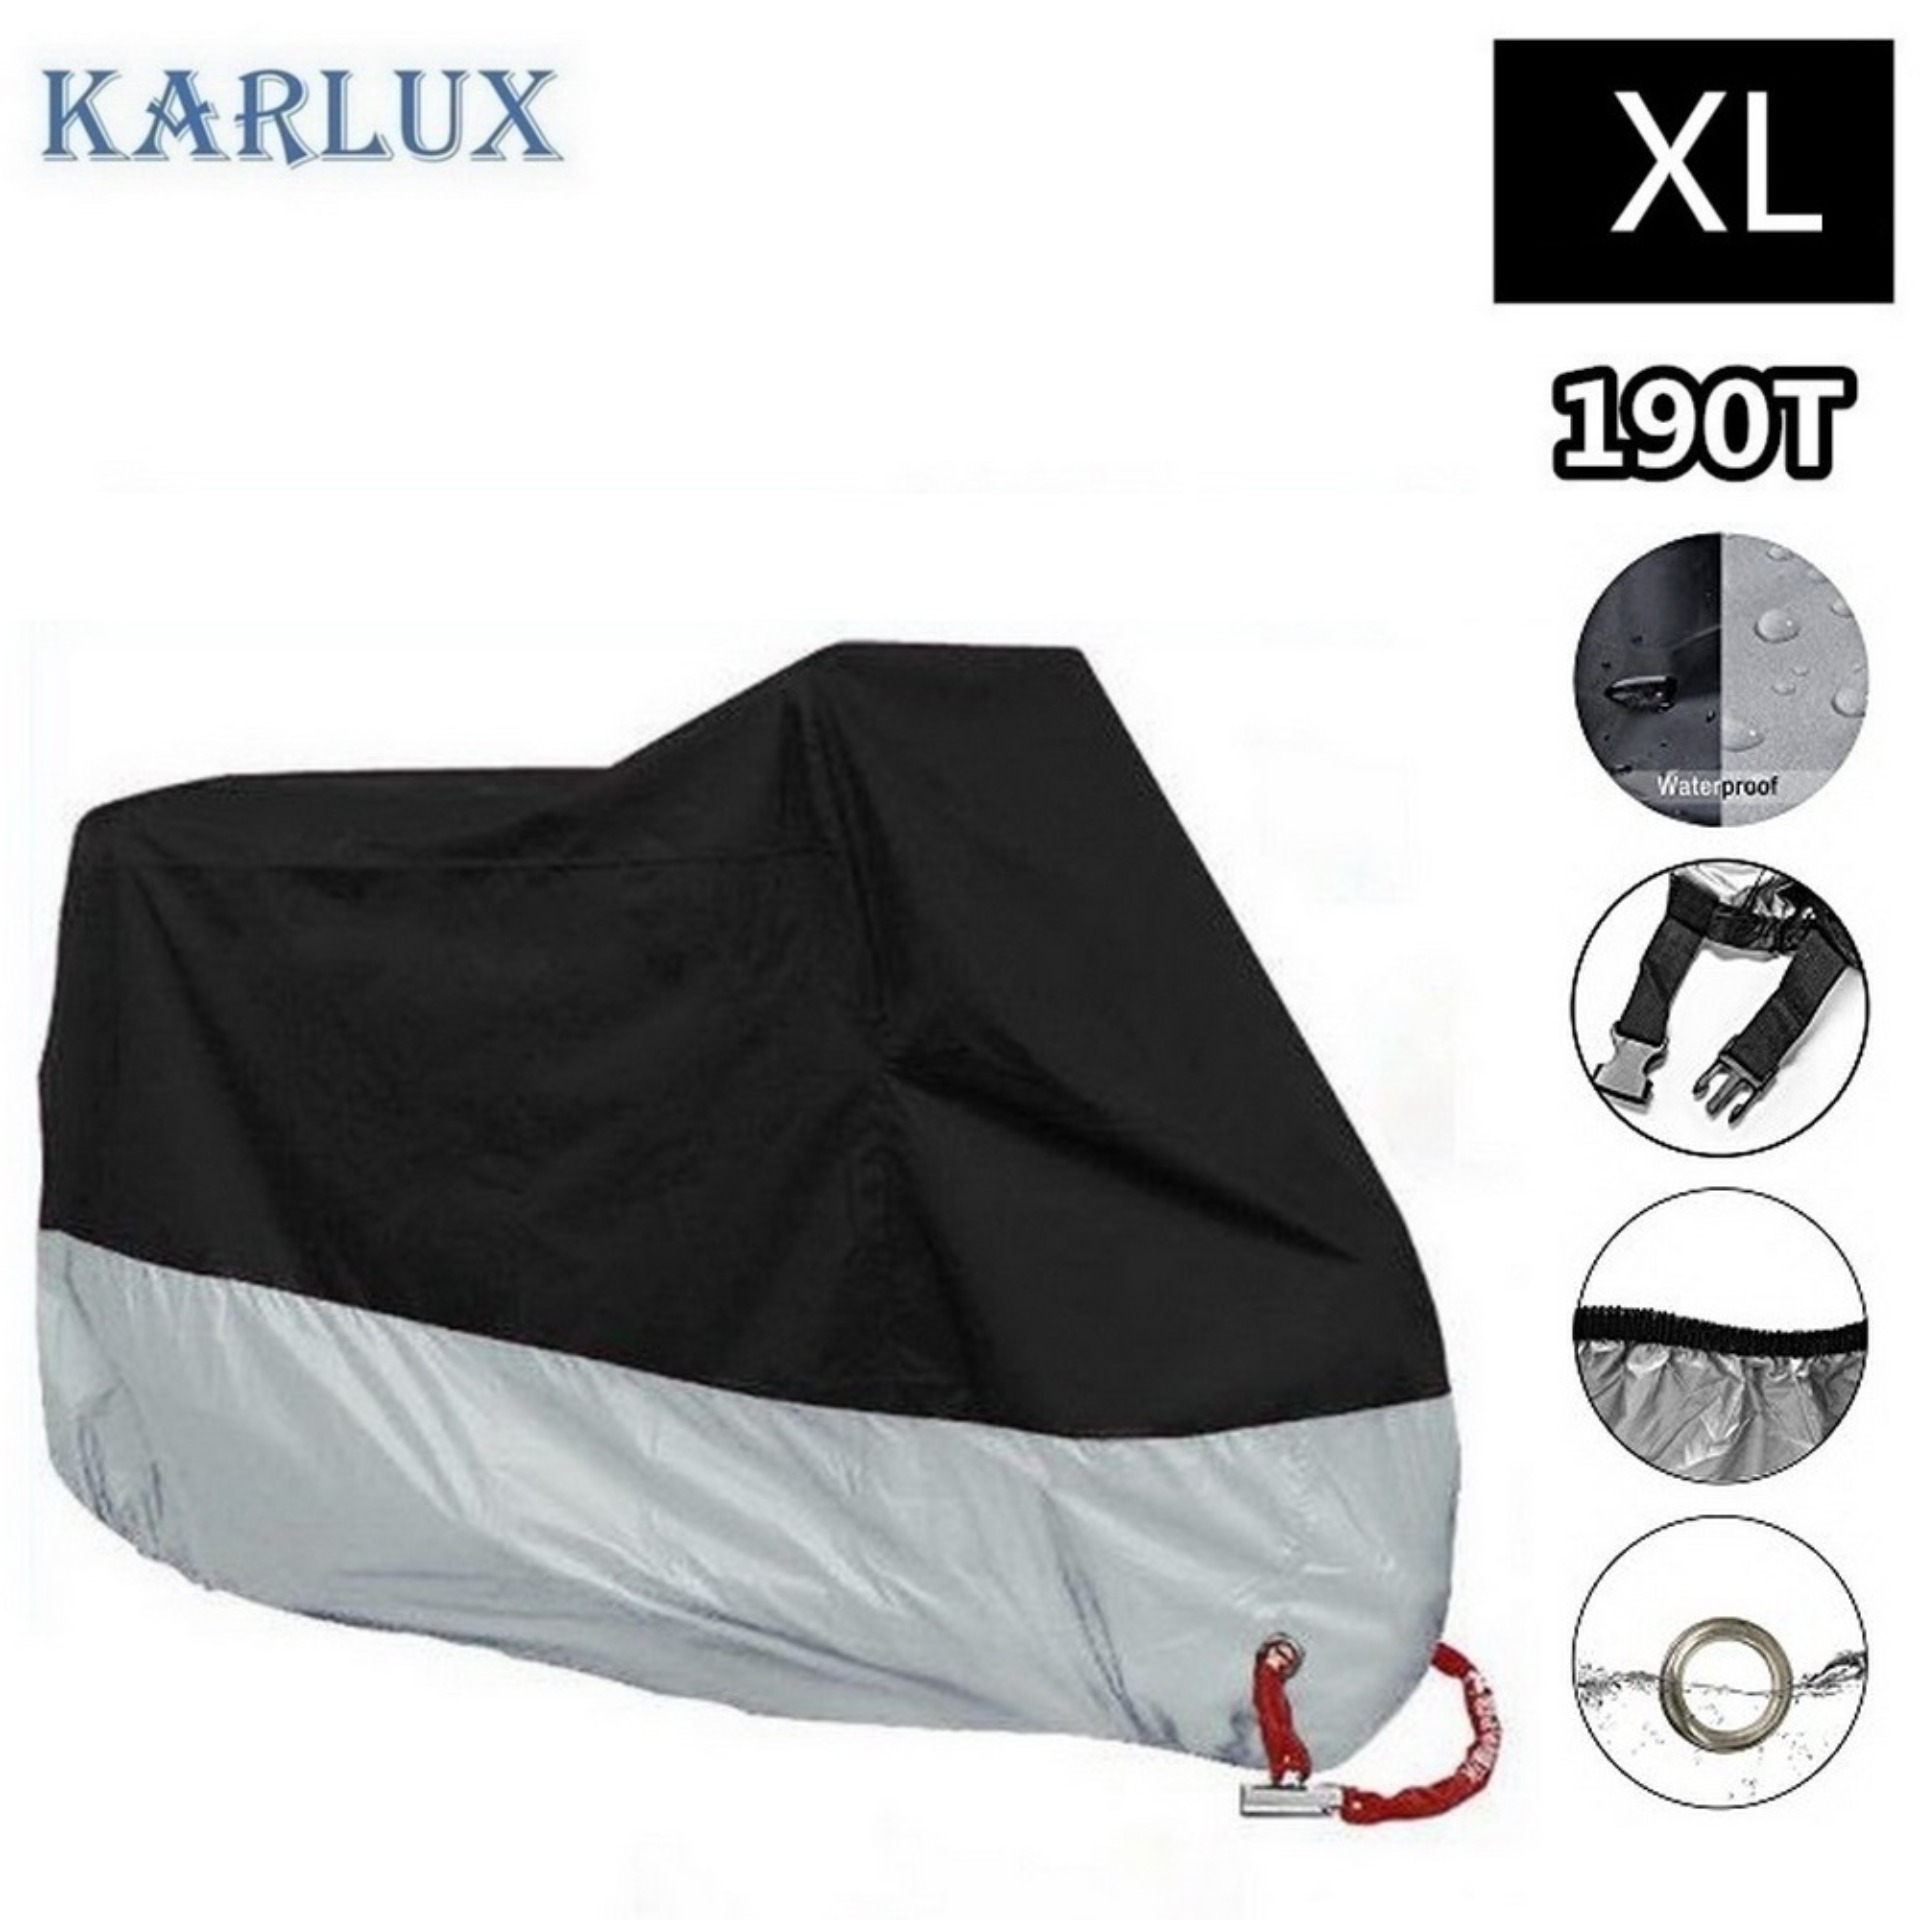 Karlux XL ผ้าคลุมรถมอเตอร์ไซค์ บิ๊กไบค์ จักยาน กันน้ำ กันแดด กันฝุ่น สี Silver/Black Motorbike Waterproof Cover Protector Case Cover Rain Protection Breathable